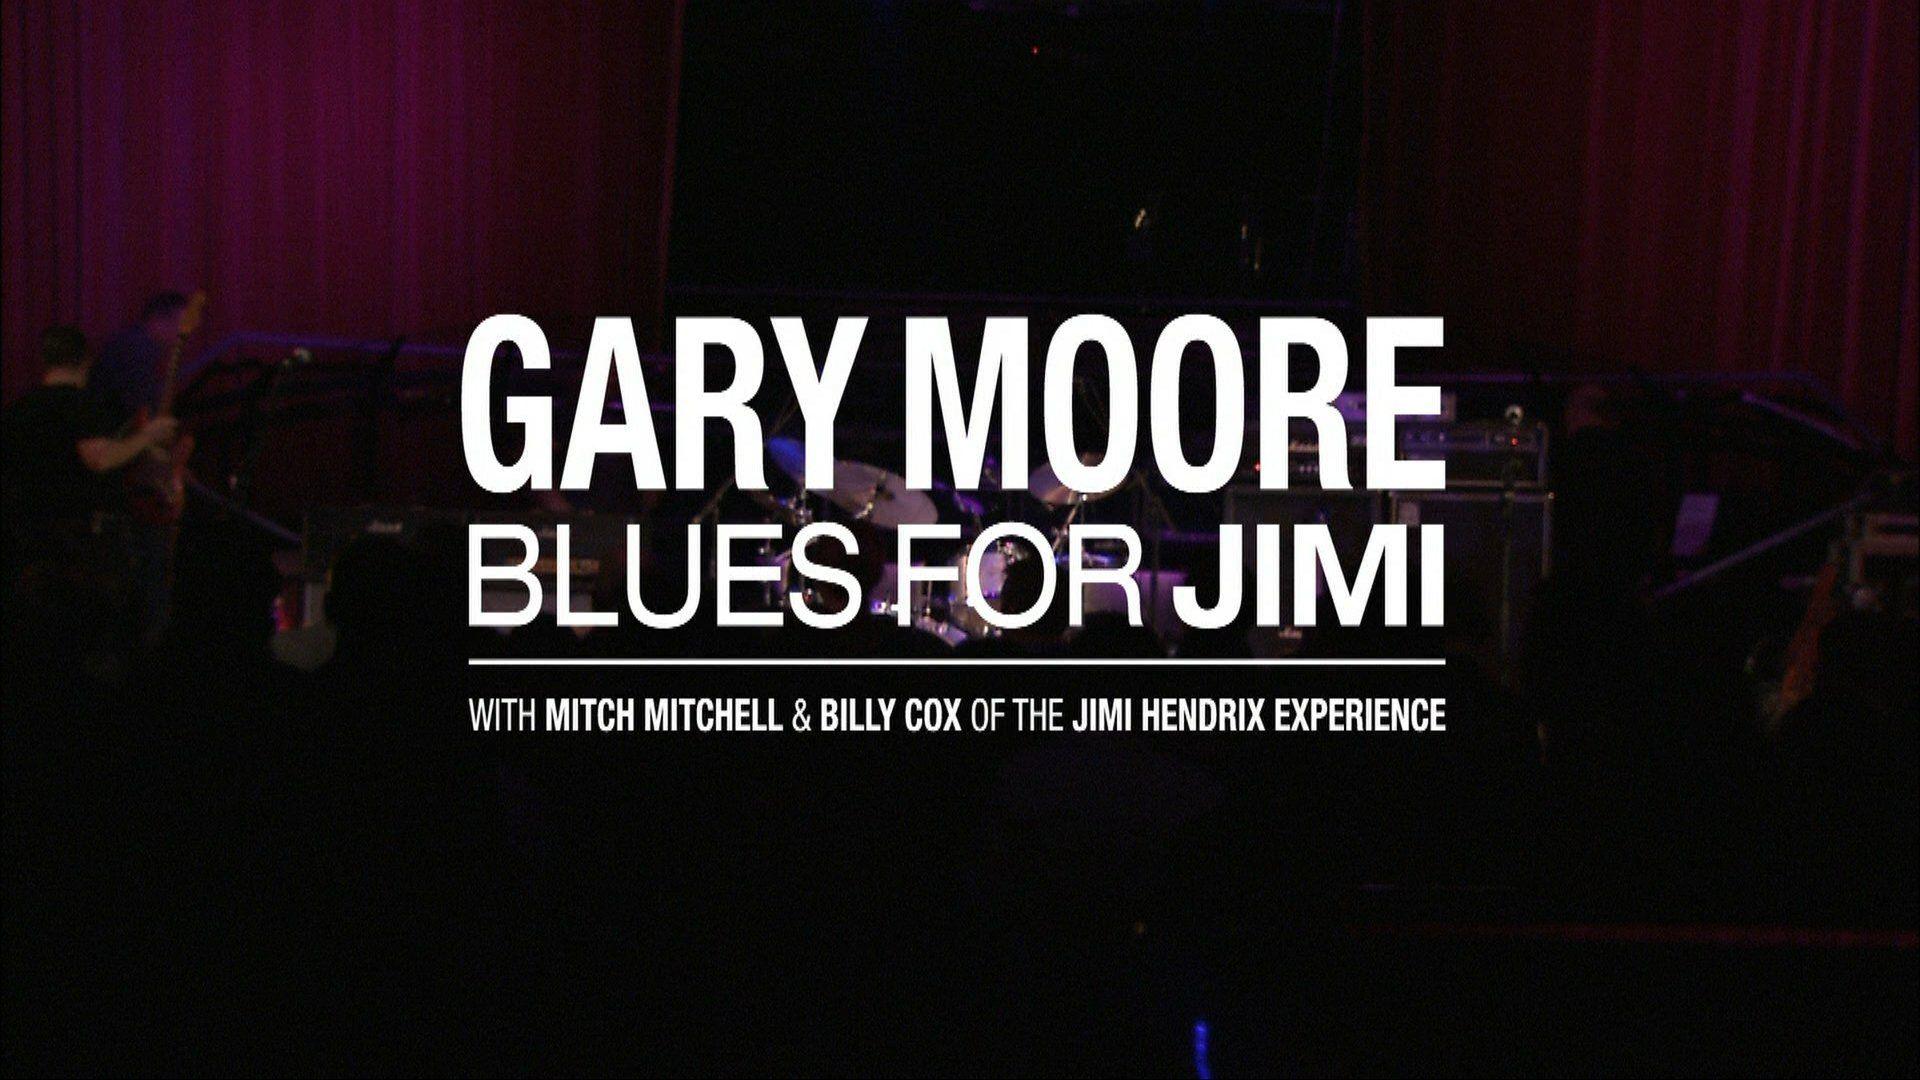 GARY MOORE blues rock heavy metal guitar jazz fusion progressive